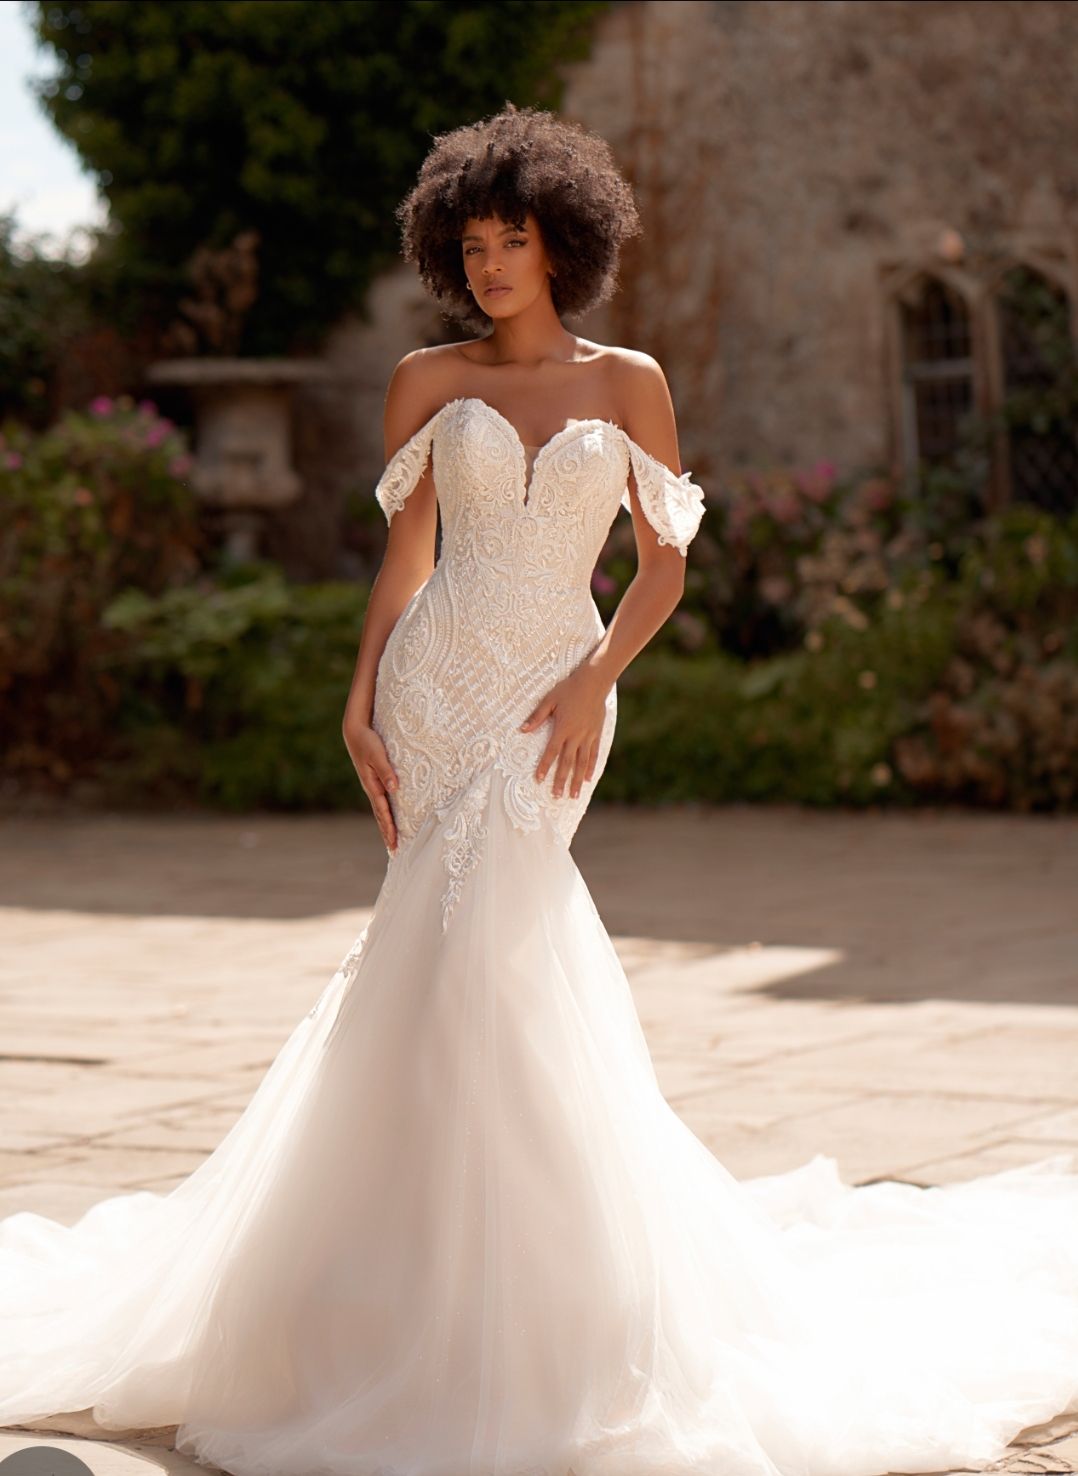 Best Dress 2 Impress Bridal-Image-25